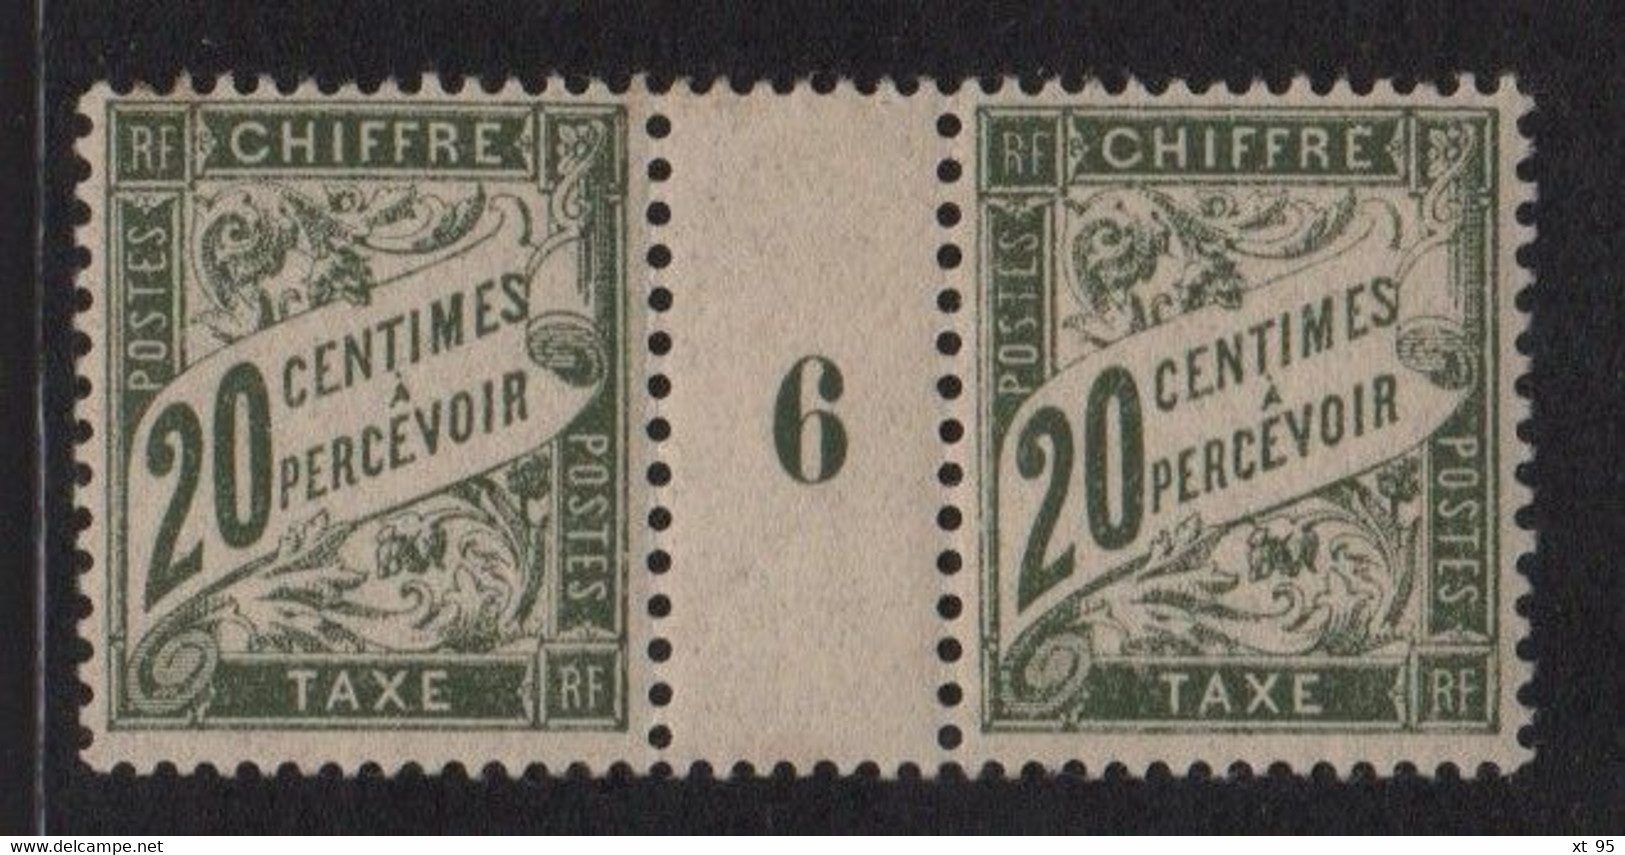 Taxe N°31 - Millesime 6 - * Neuf Avec Trace De Charniere - Cote 28€ - 1859-1959 Mint/hinged